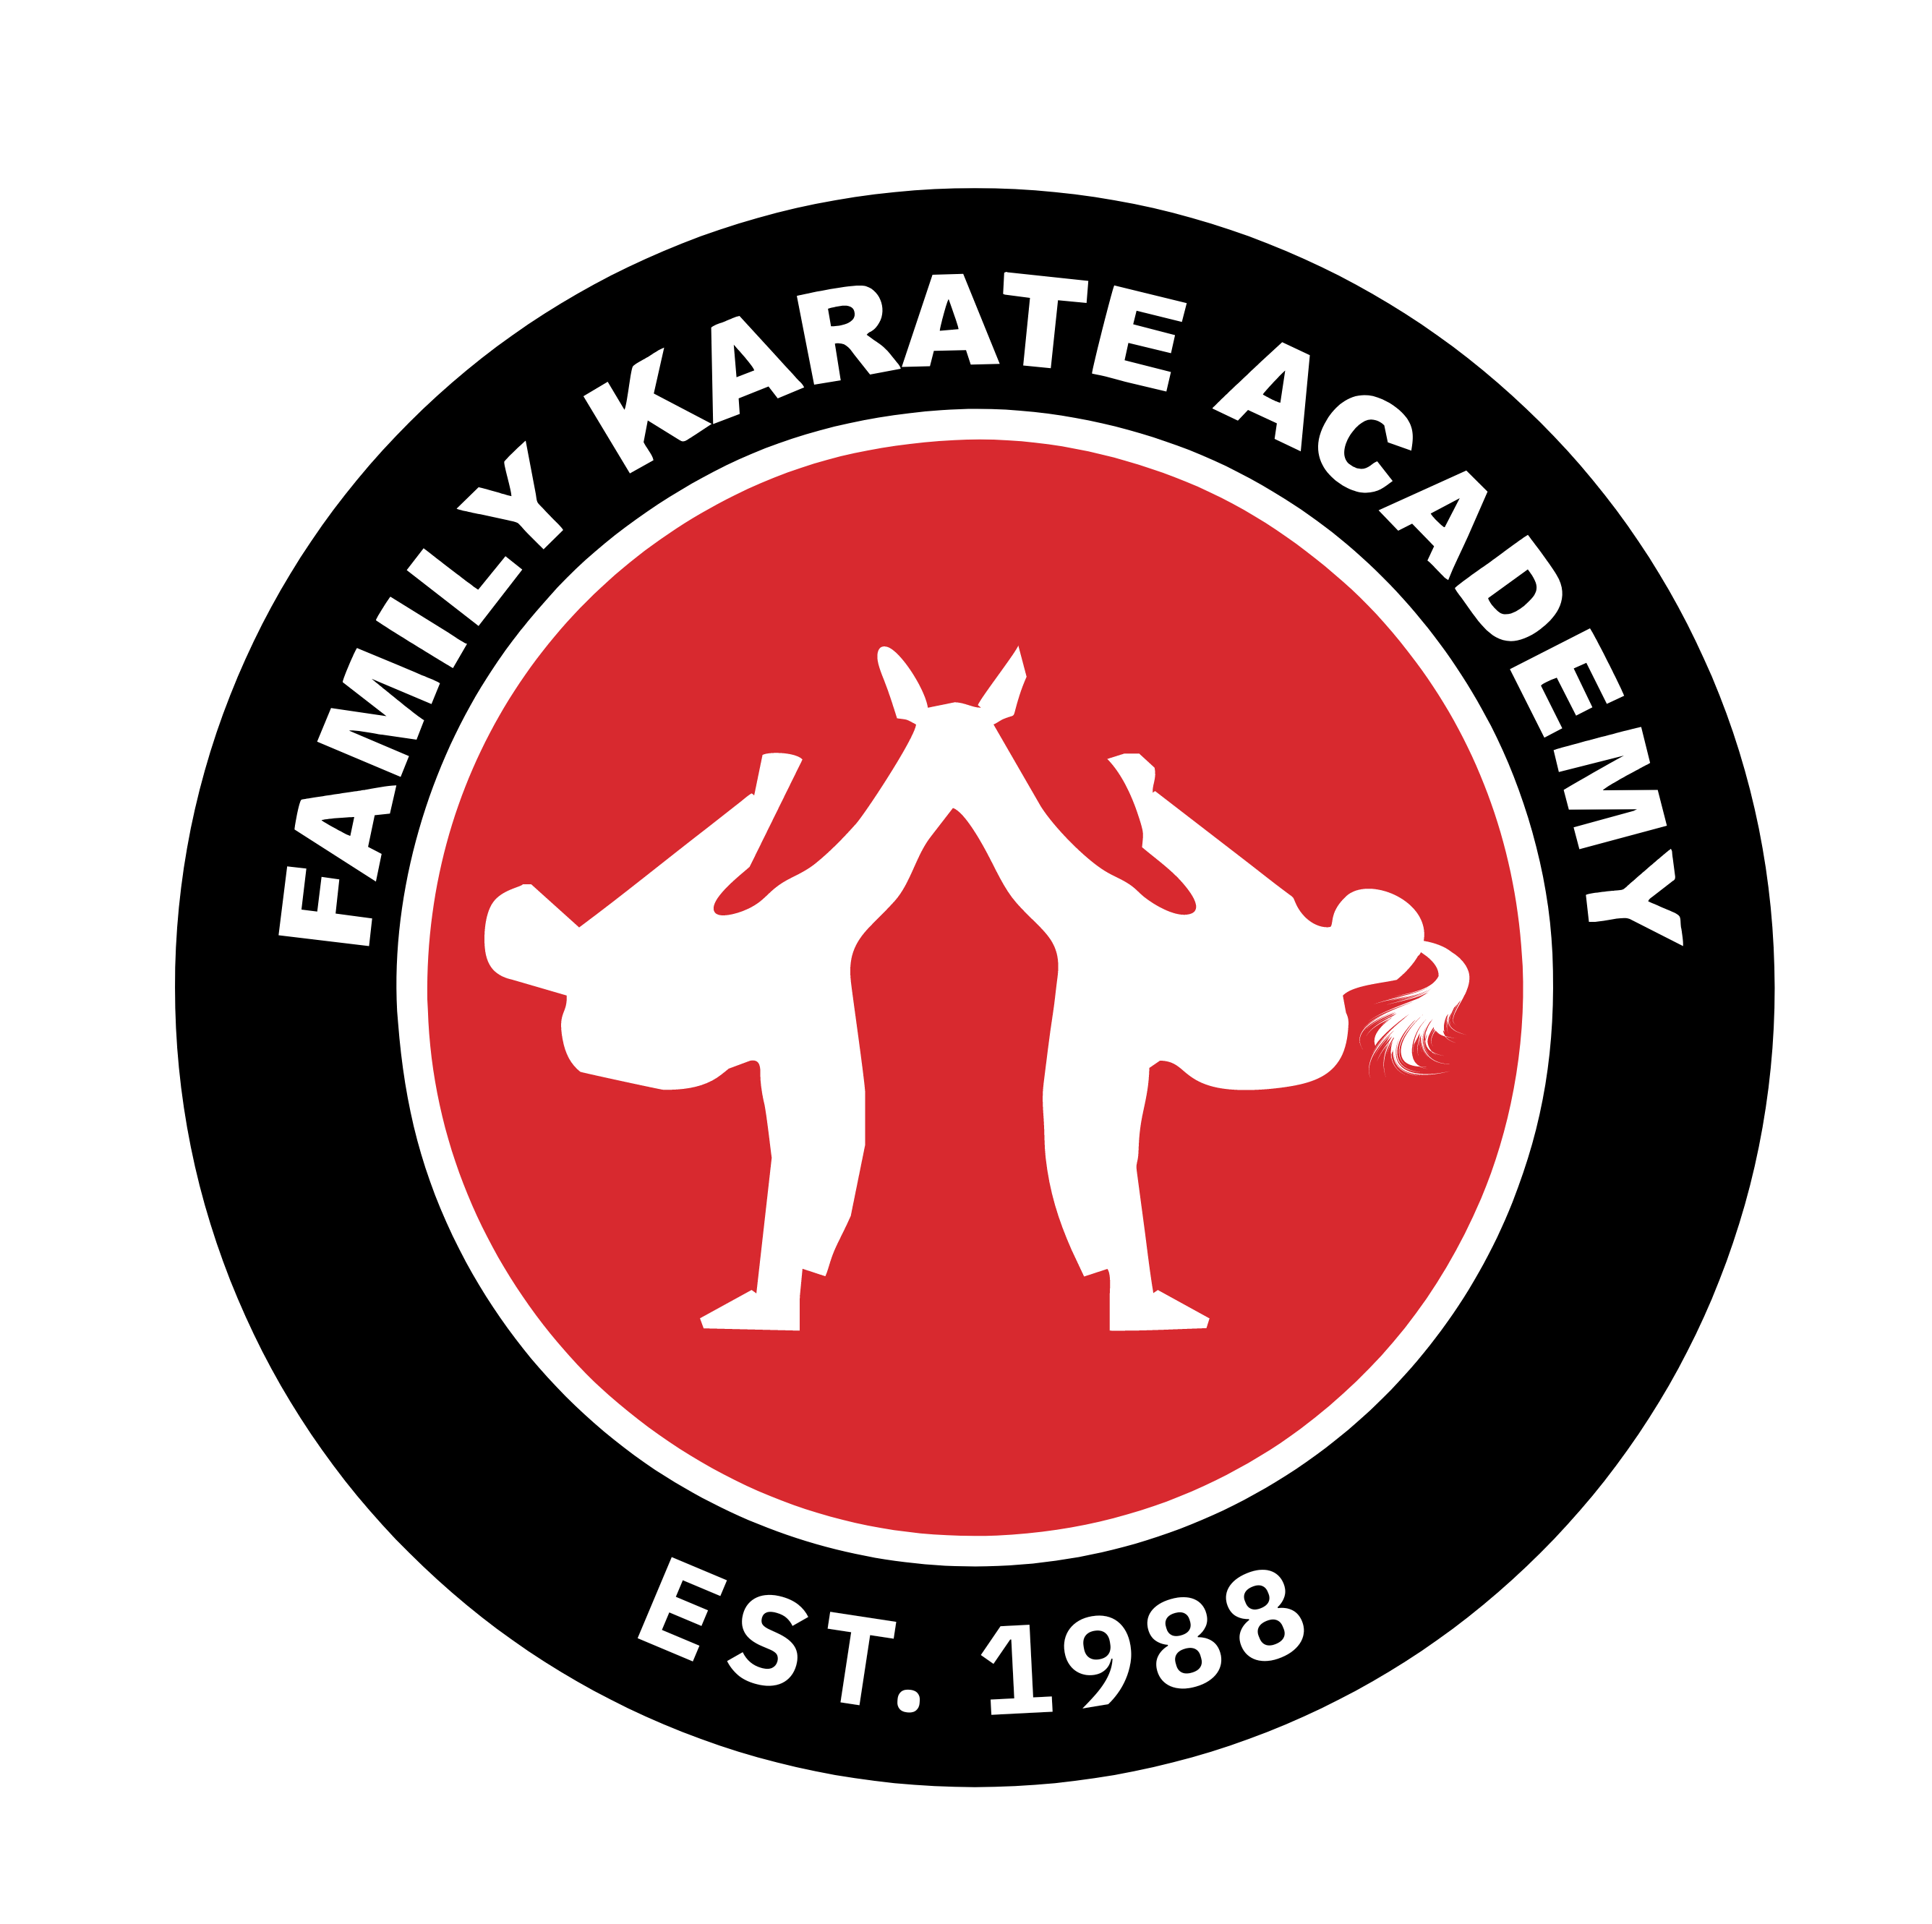 Family Karate Academy